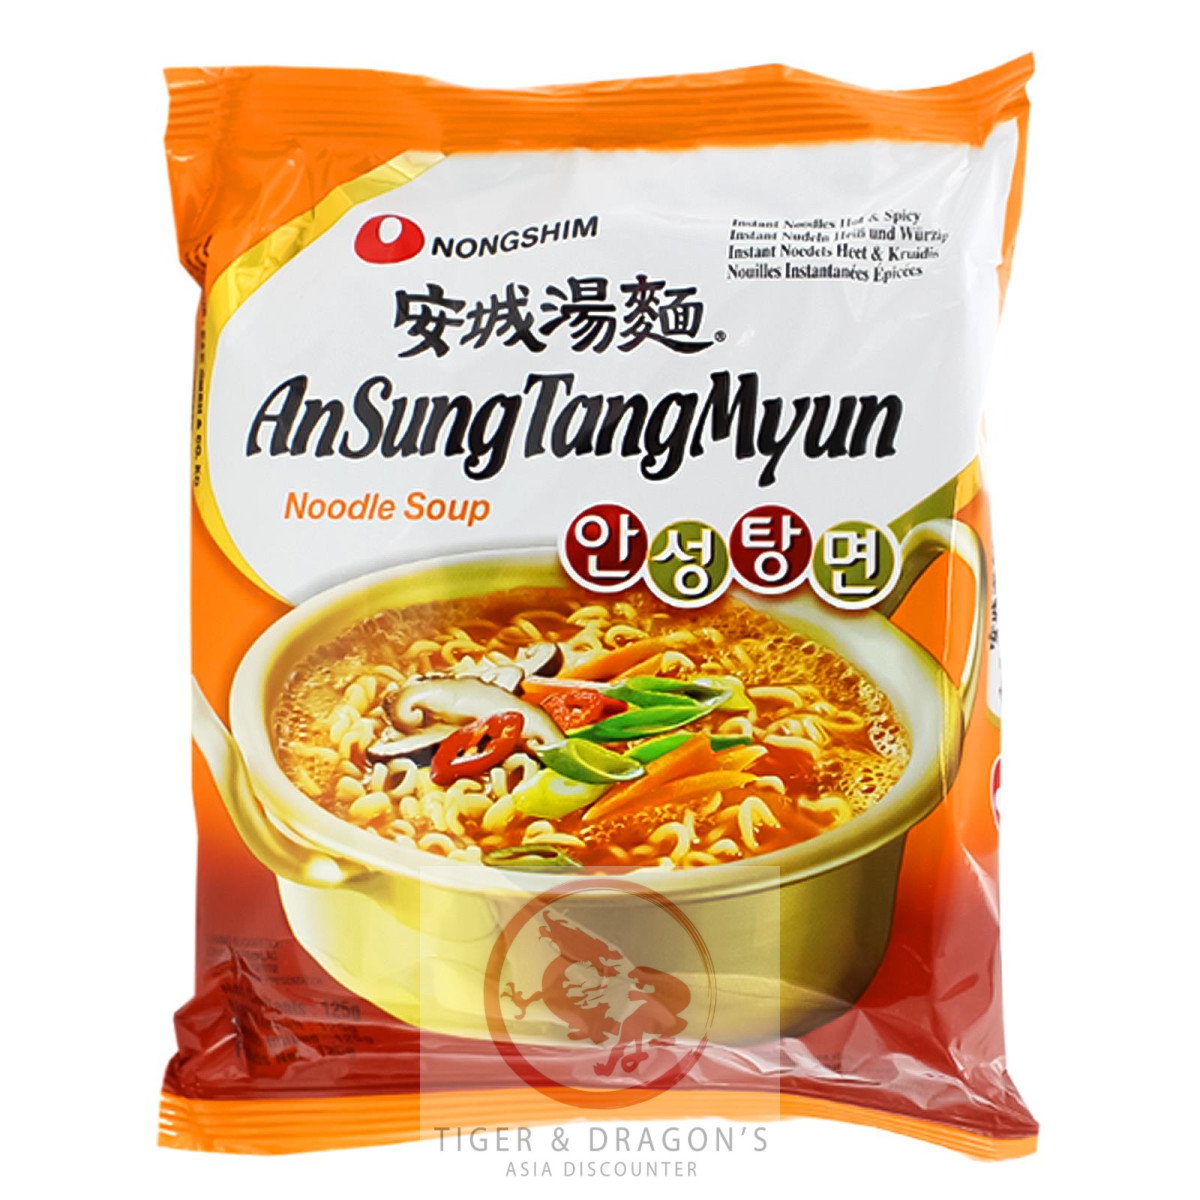 Nongshim Ansung Ramen Nudeln Hot & Spicy 125g